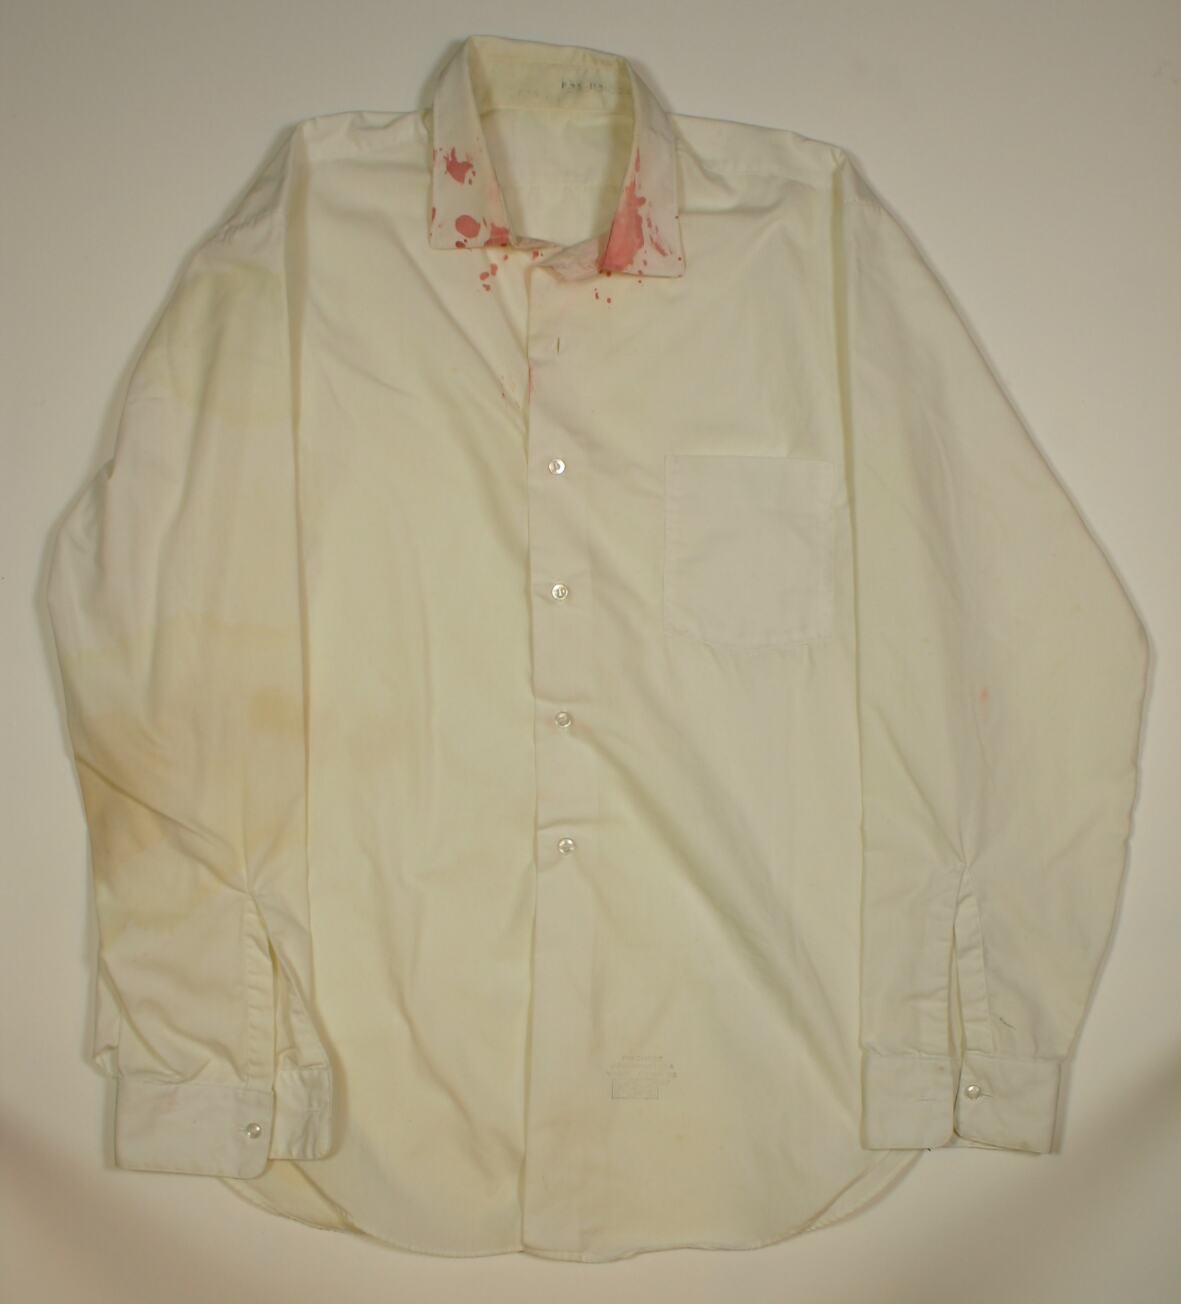 Shirt - White, Red Paint, L.B. Johnson Protest, 1966